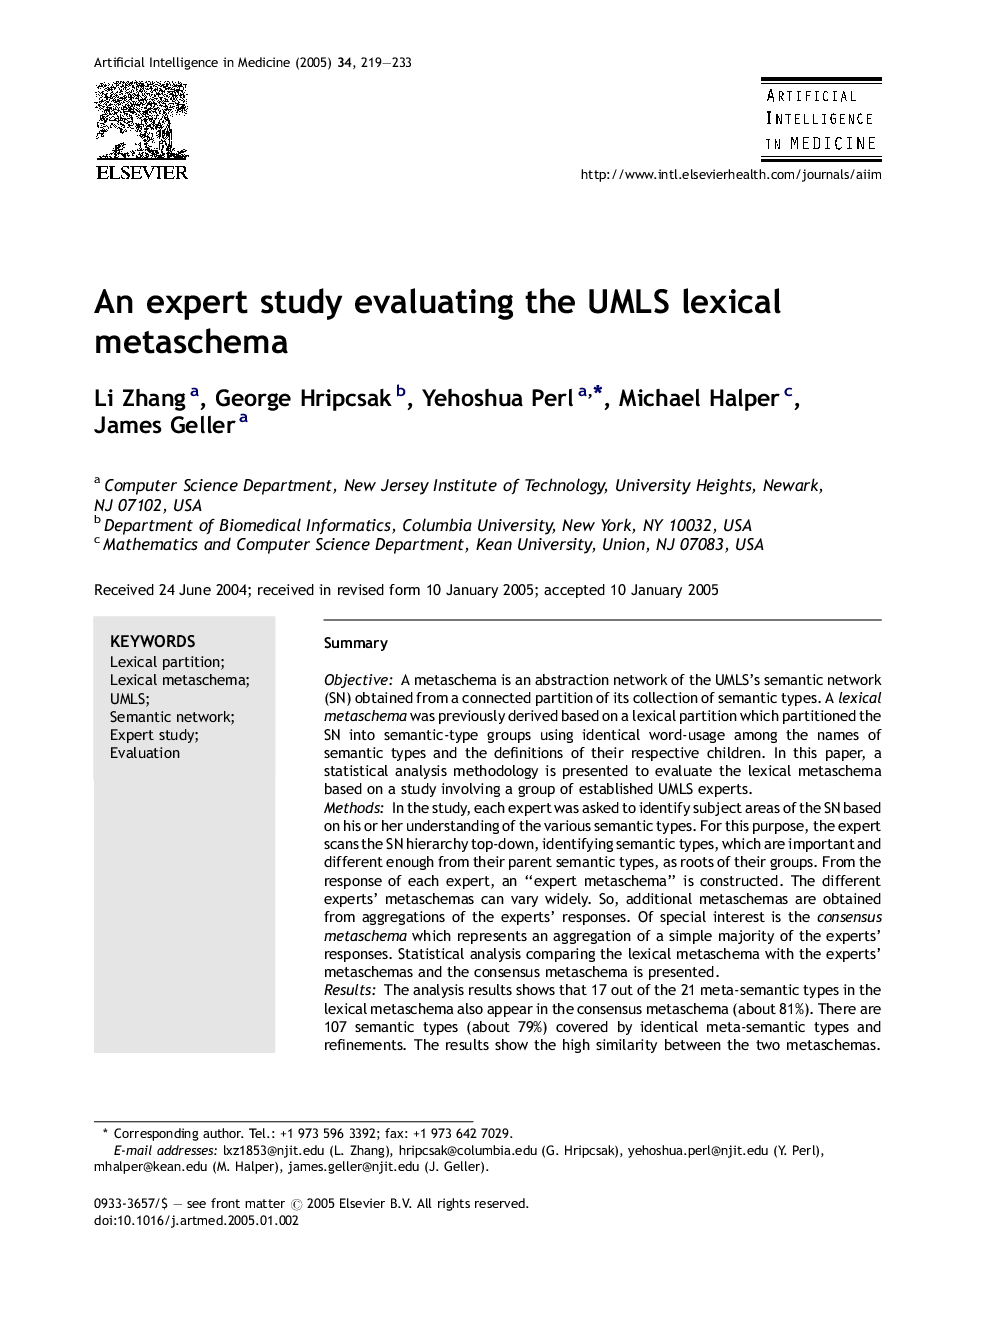 An expert study evaluating the UMLS lexical metaschema